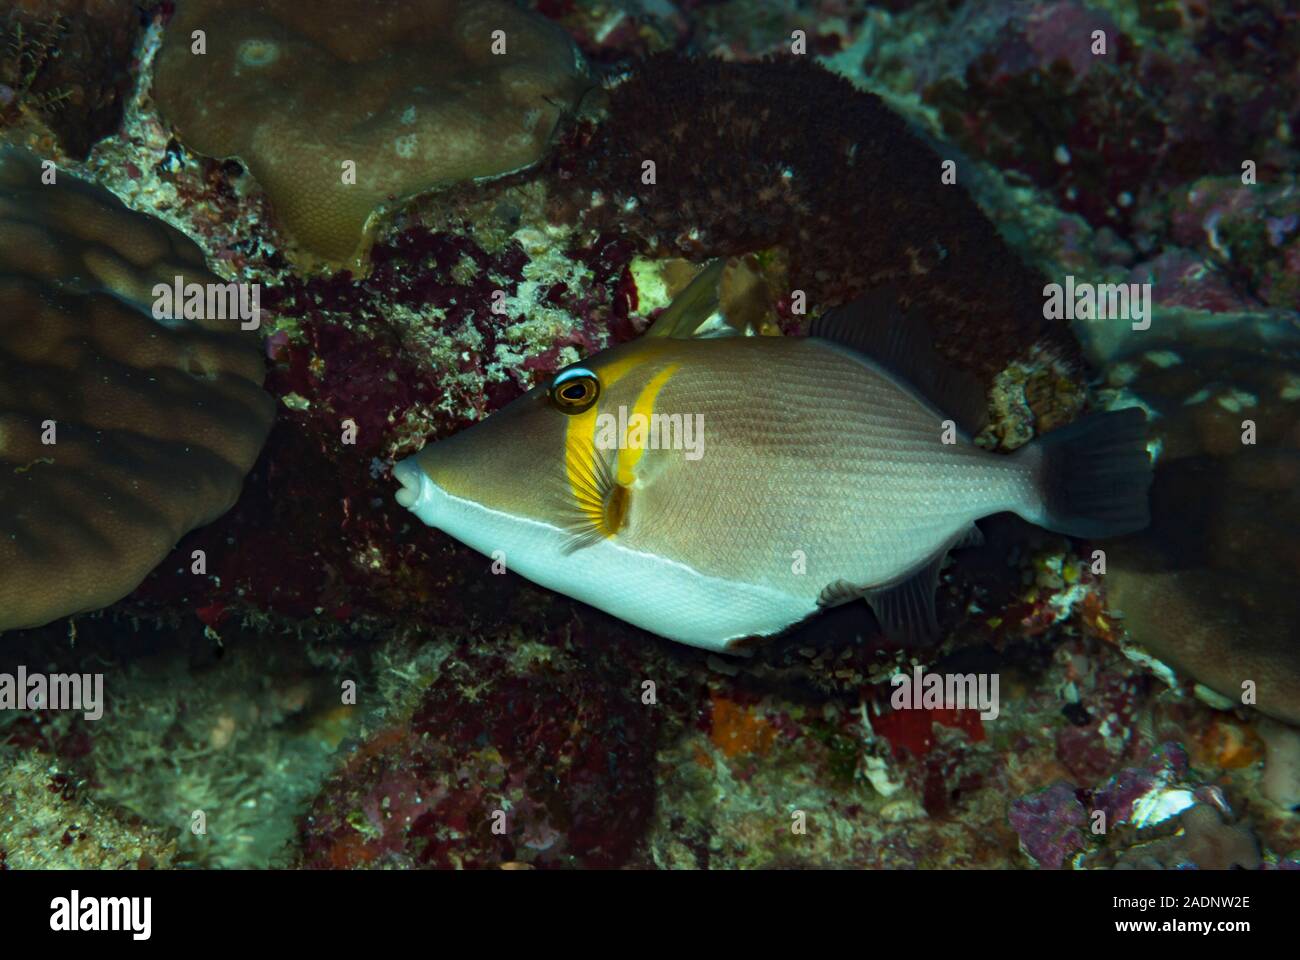 Scythe Triggerfish Sufflamen bursa Stock Photo